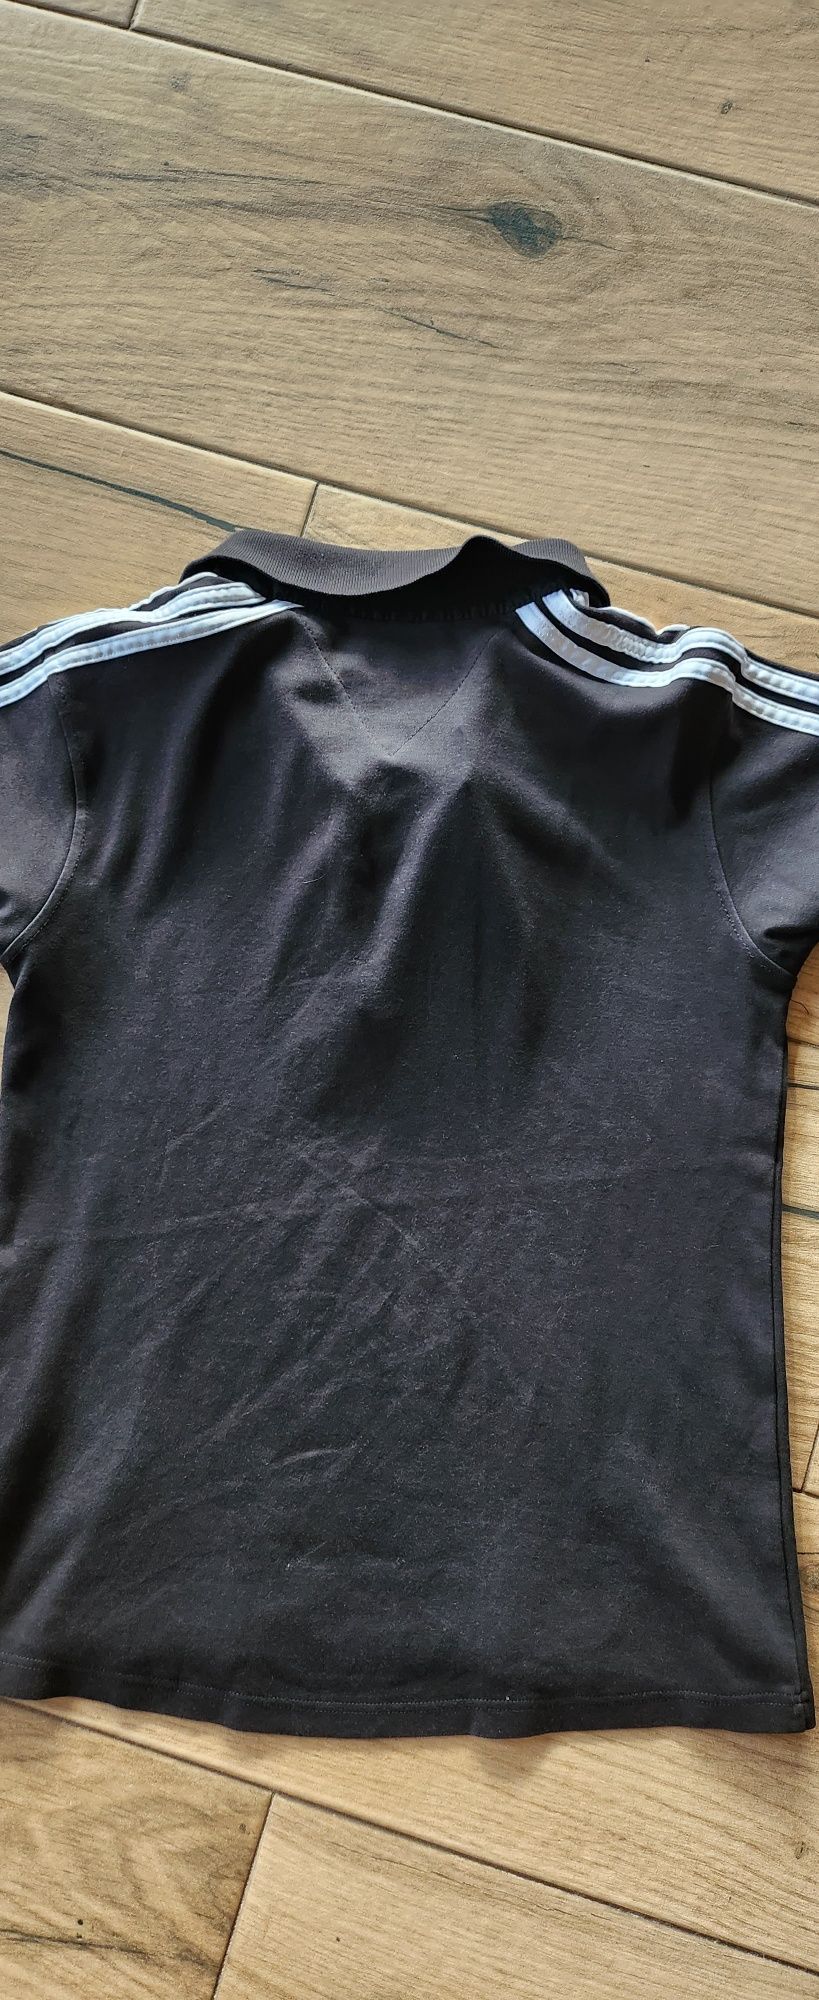 Koszulka Adidas r.164/170